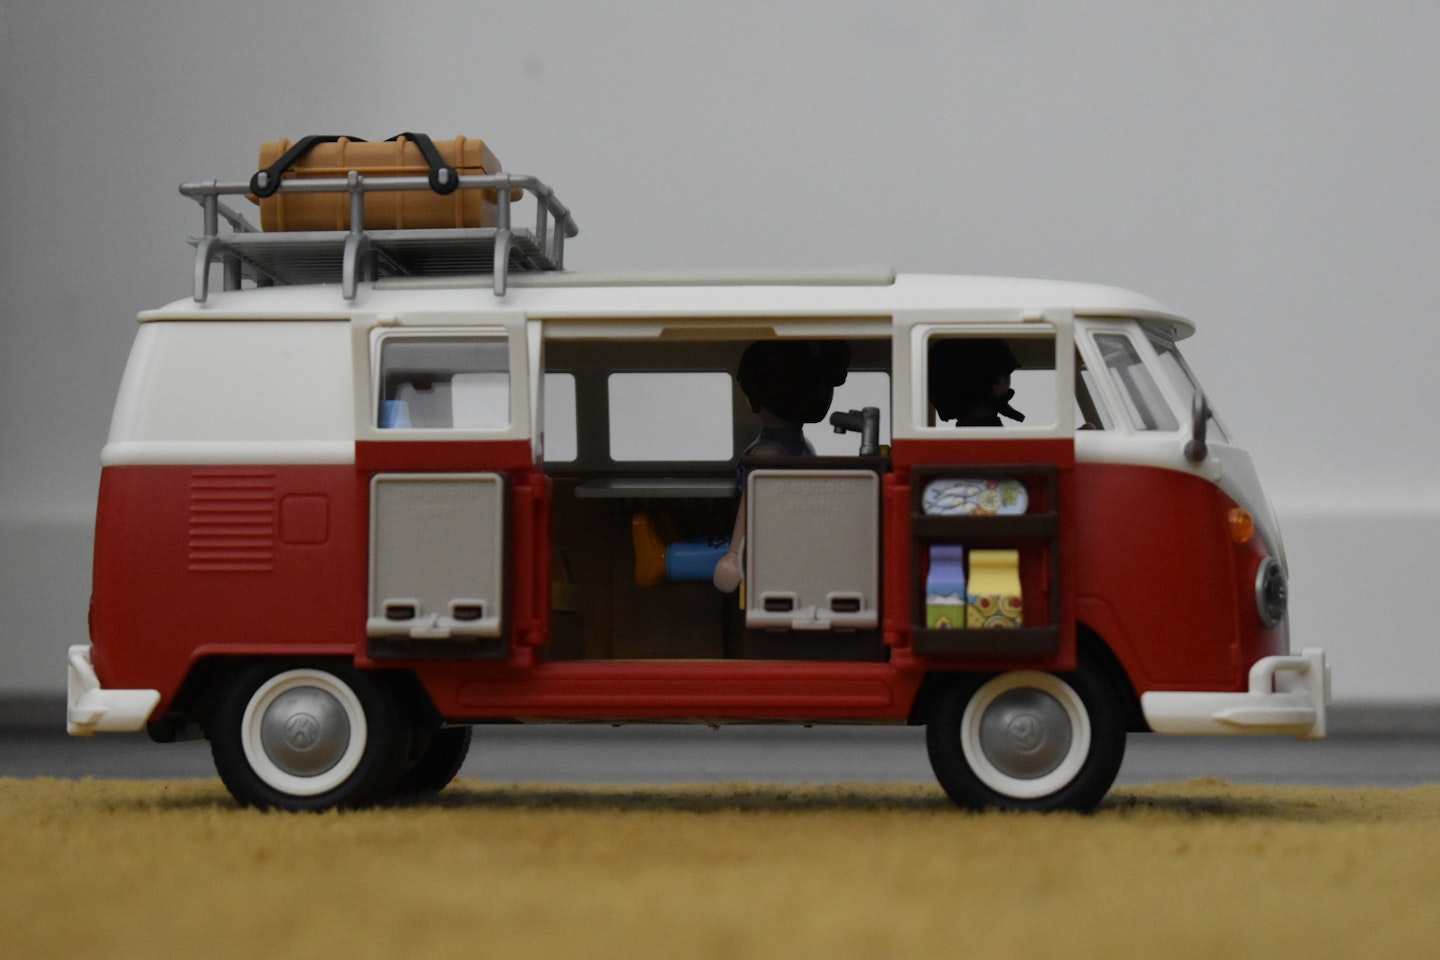 Playmobil VW Campervan with the side doors open